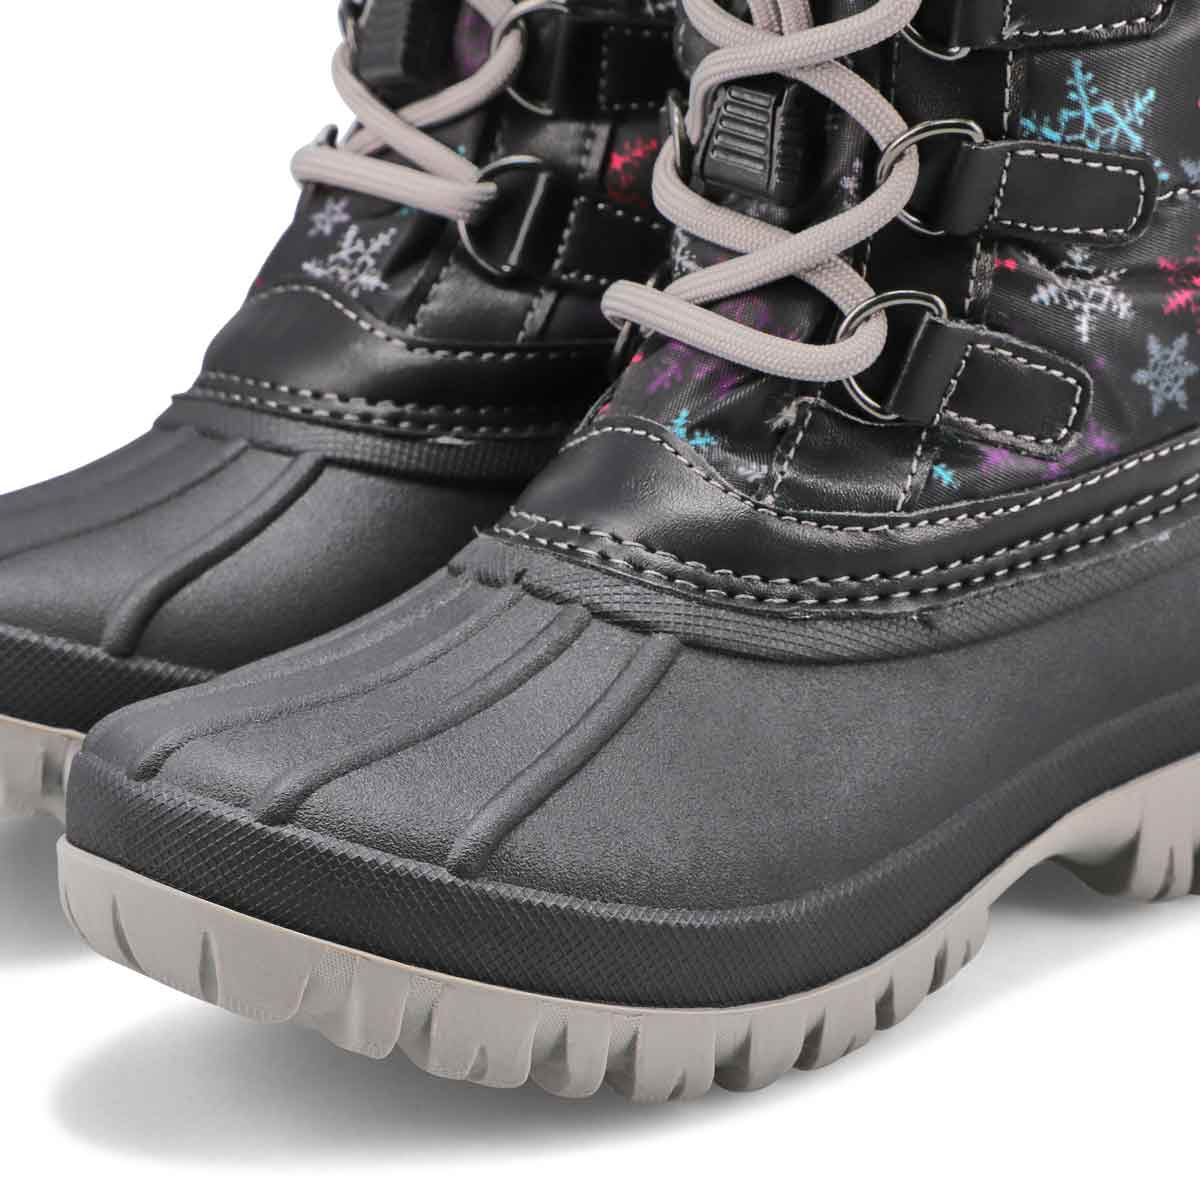 Girls' Carly Waterproof Winter Boot - Black